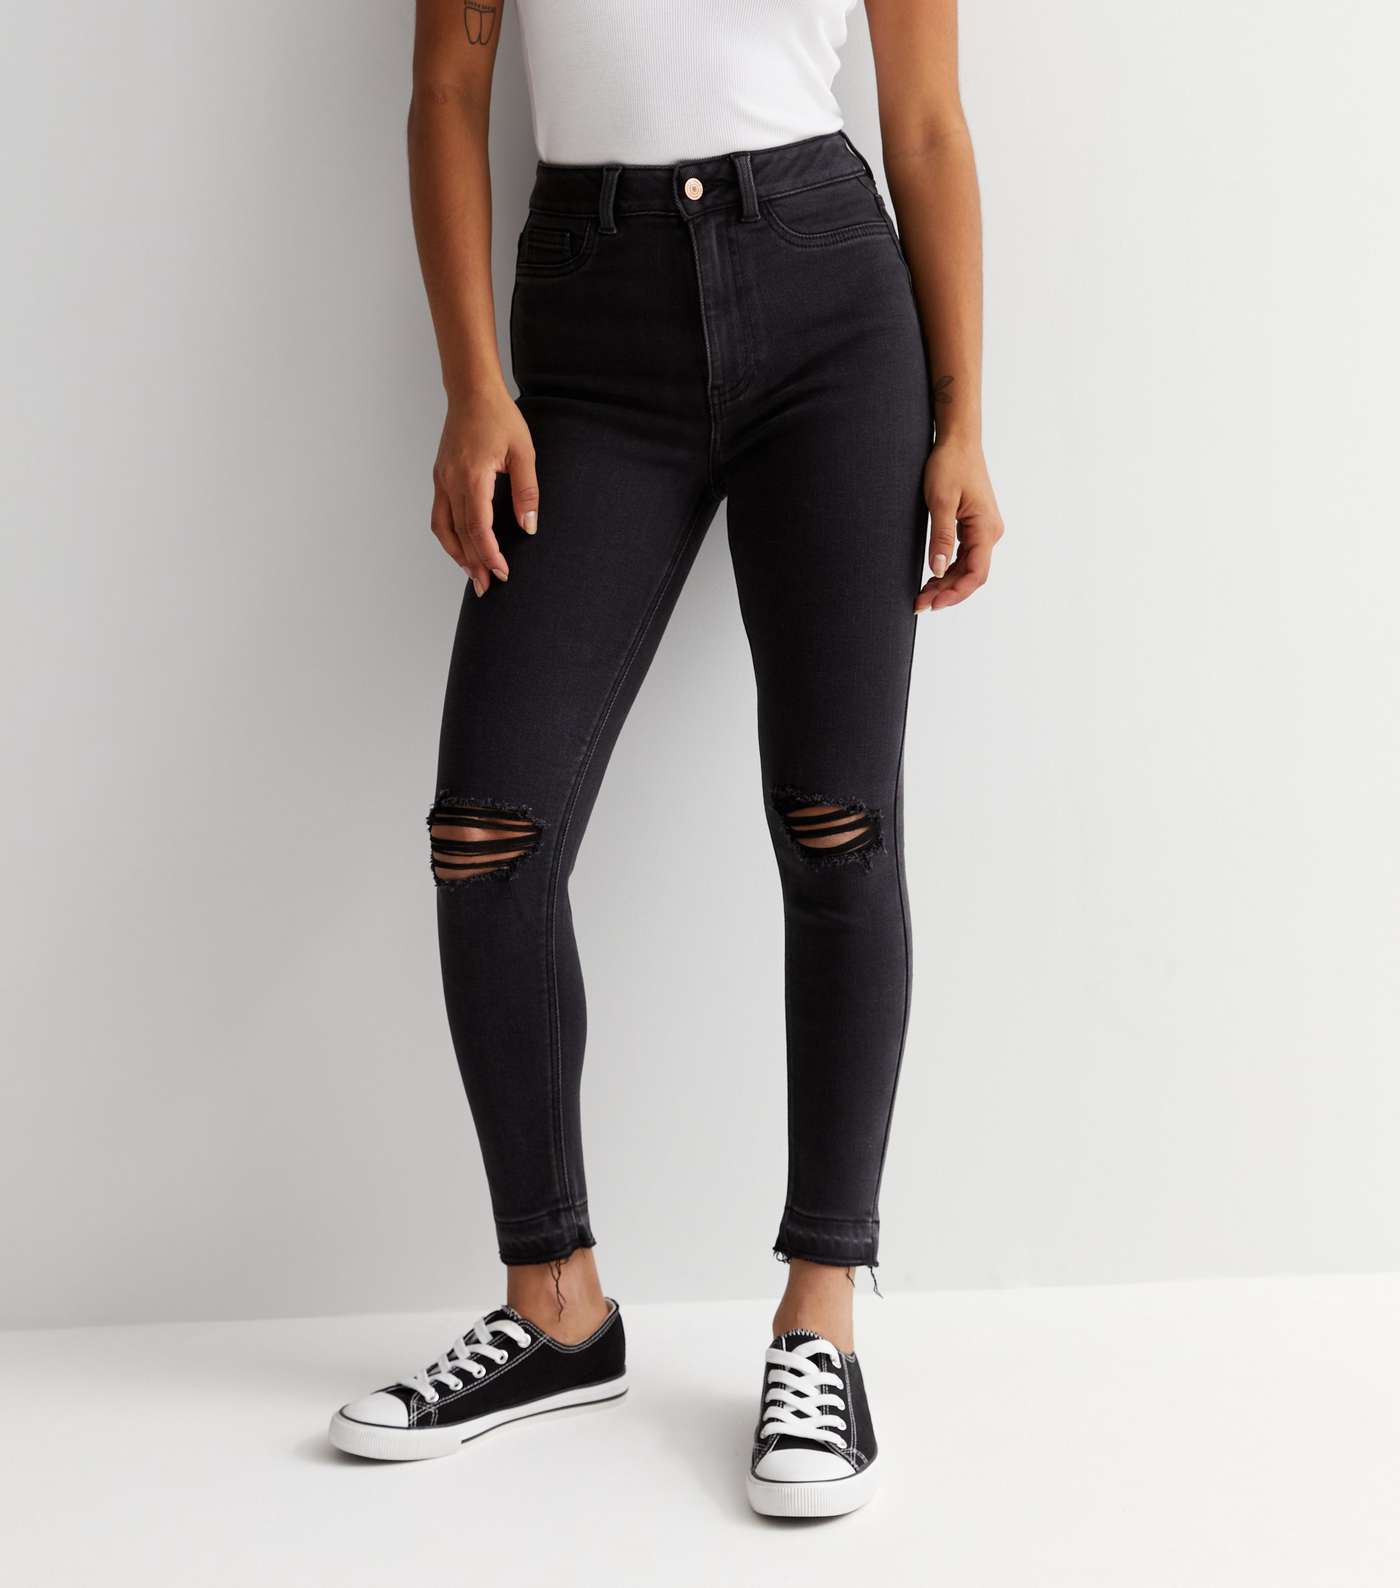 Petite Black Ripped Knee High Waist Hallie Super Skinny Jeans Image 2